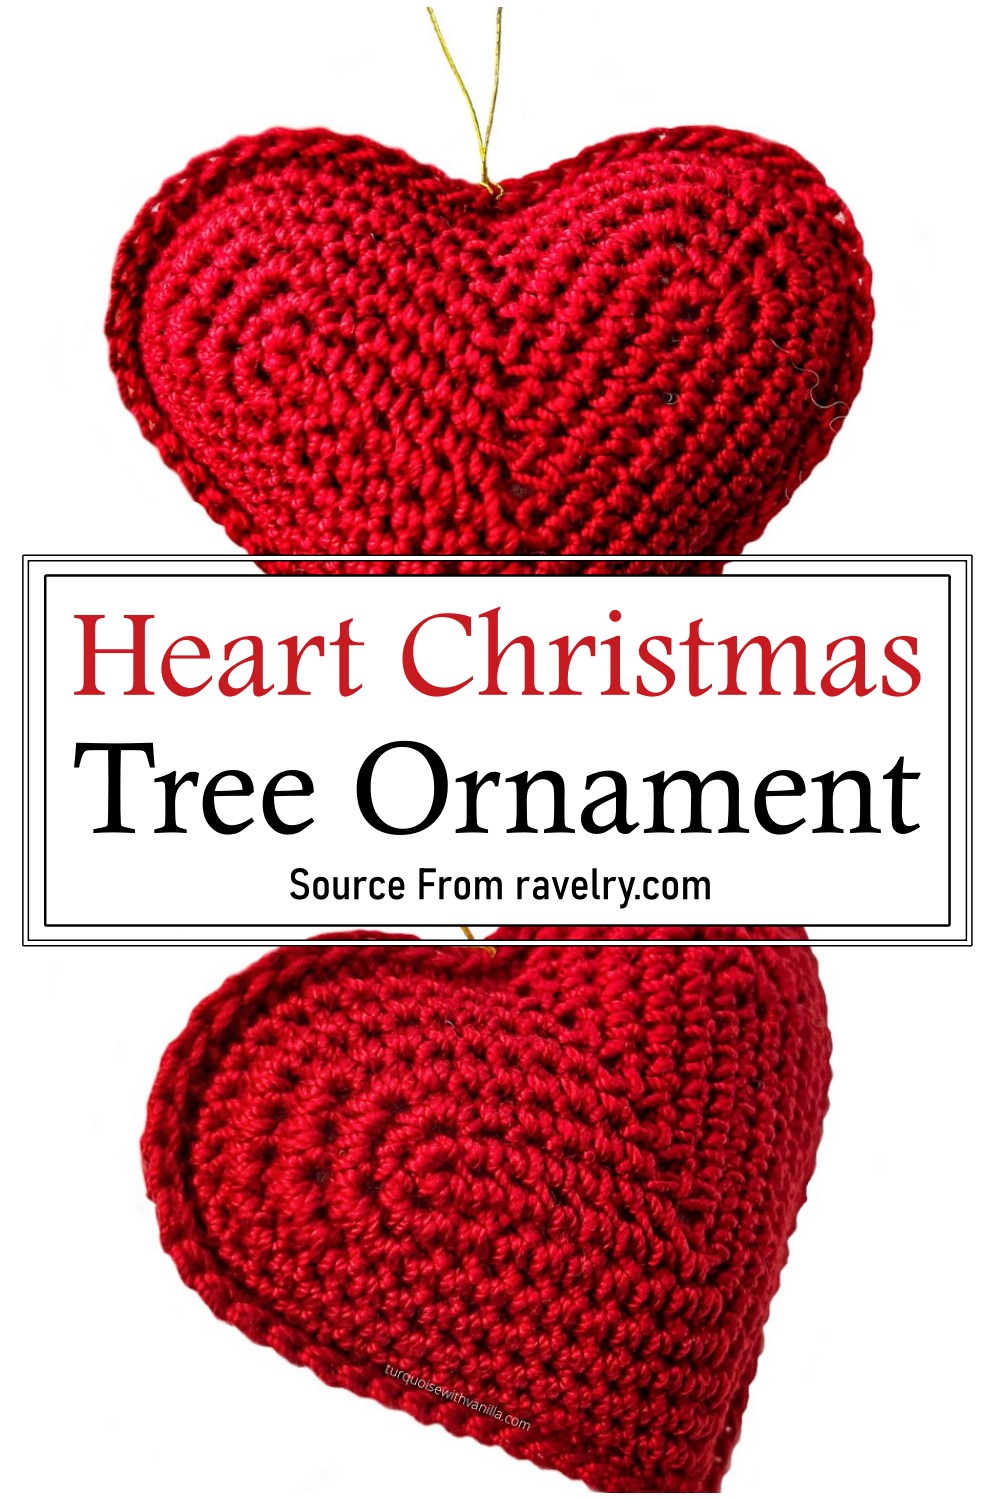 Heart Christmas Tree Ornament